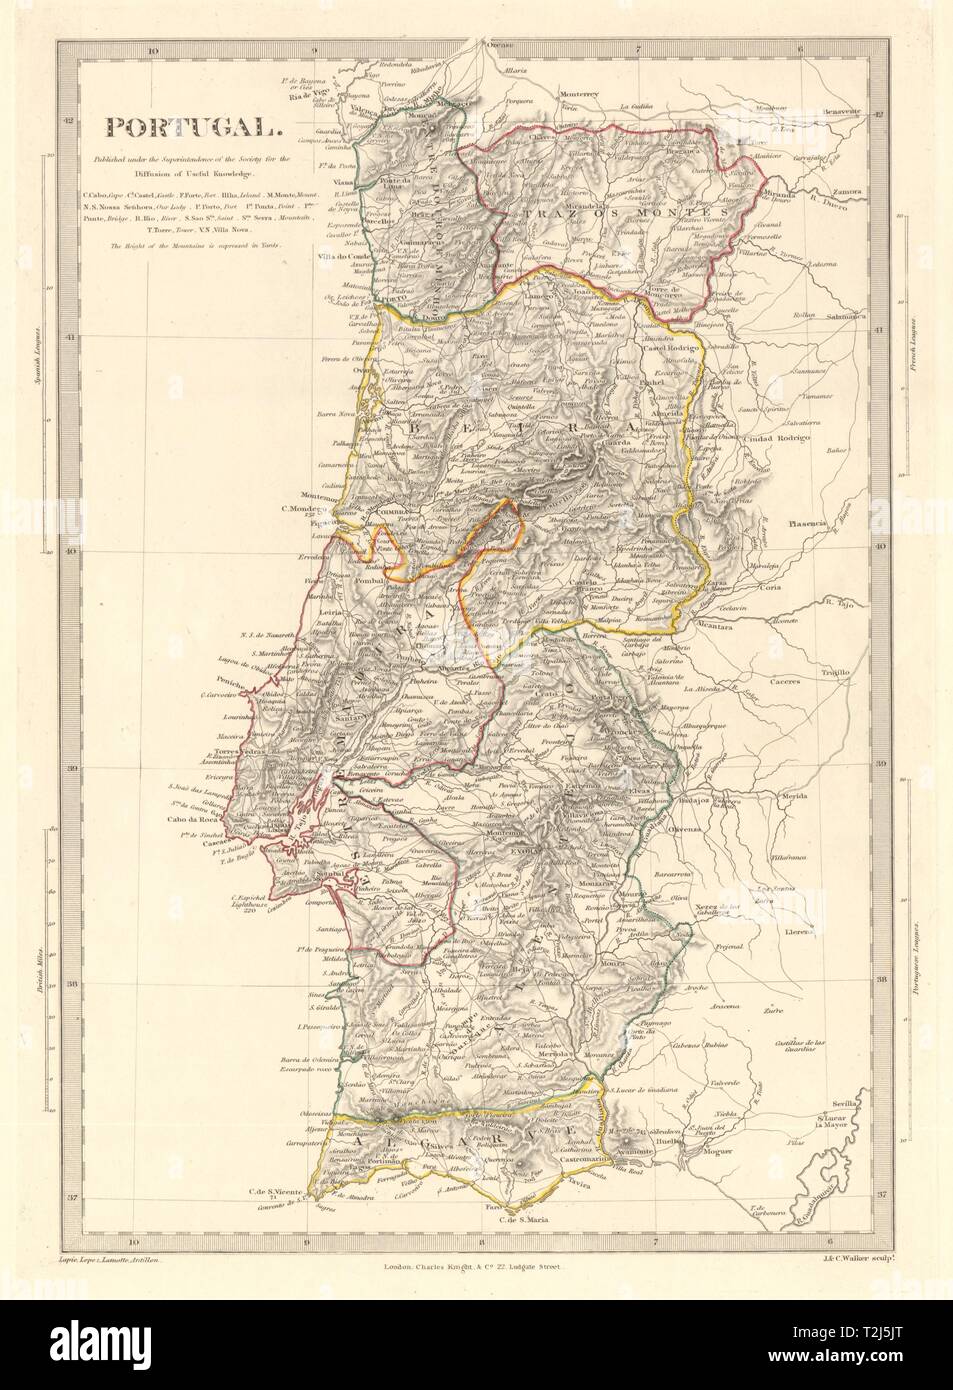 PORTUGAL. Provinces. Algarve Alentejo Estremadura Beira etc. SDUK 1845 old map Stock Photo